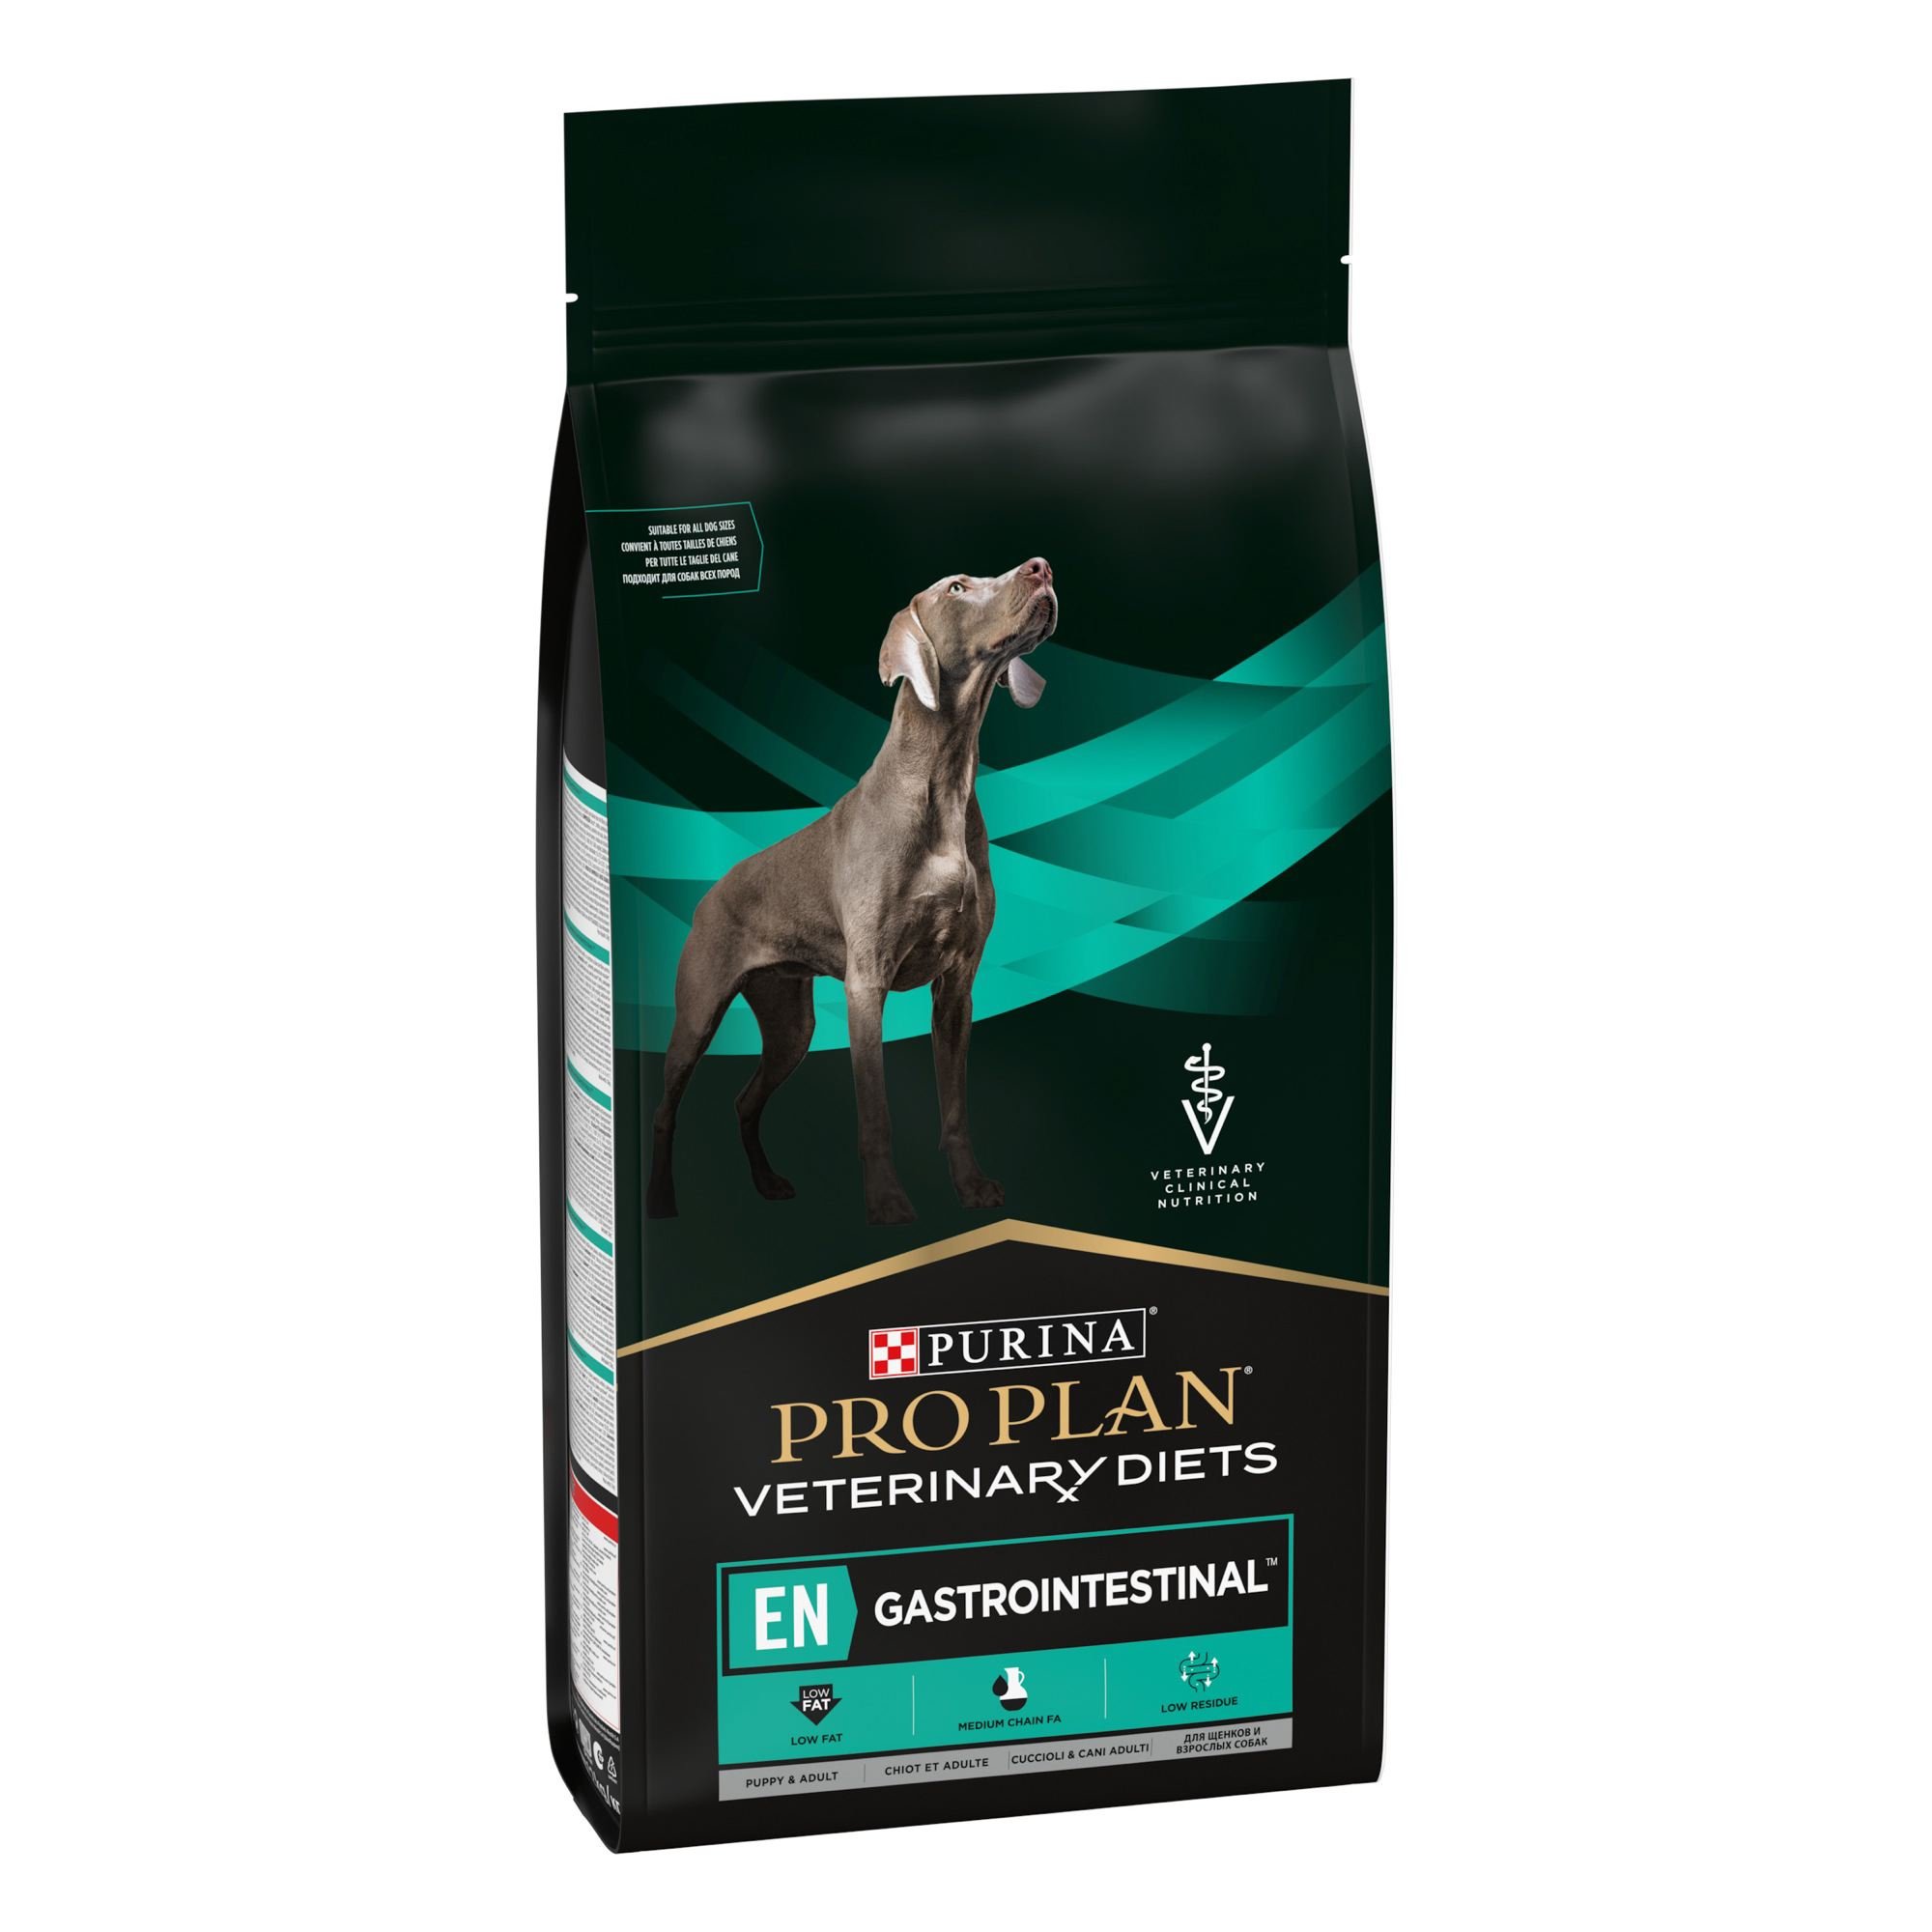 Сухой корм для собак при заболеваниях желудочно-кишечного тракта Purina Pro Plan Veterinary Diets EN Gastrointestinal, 12 кг - фото 3